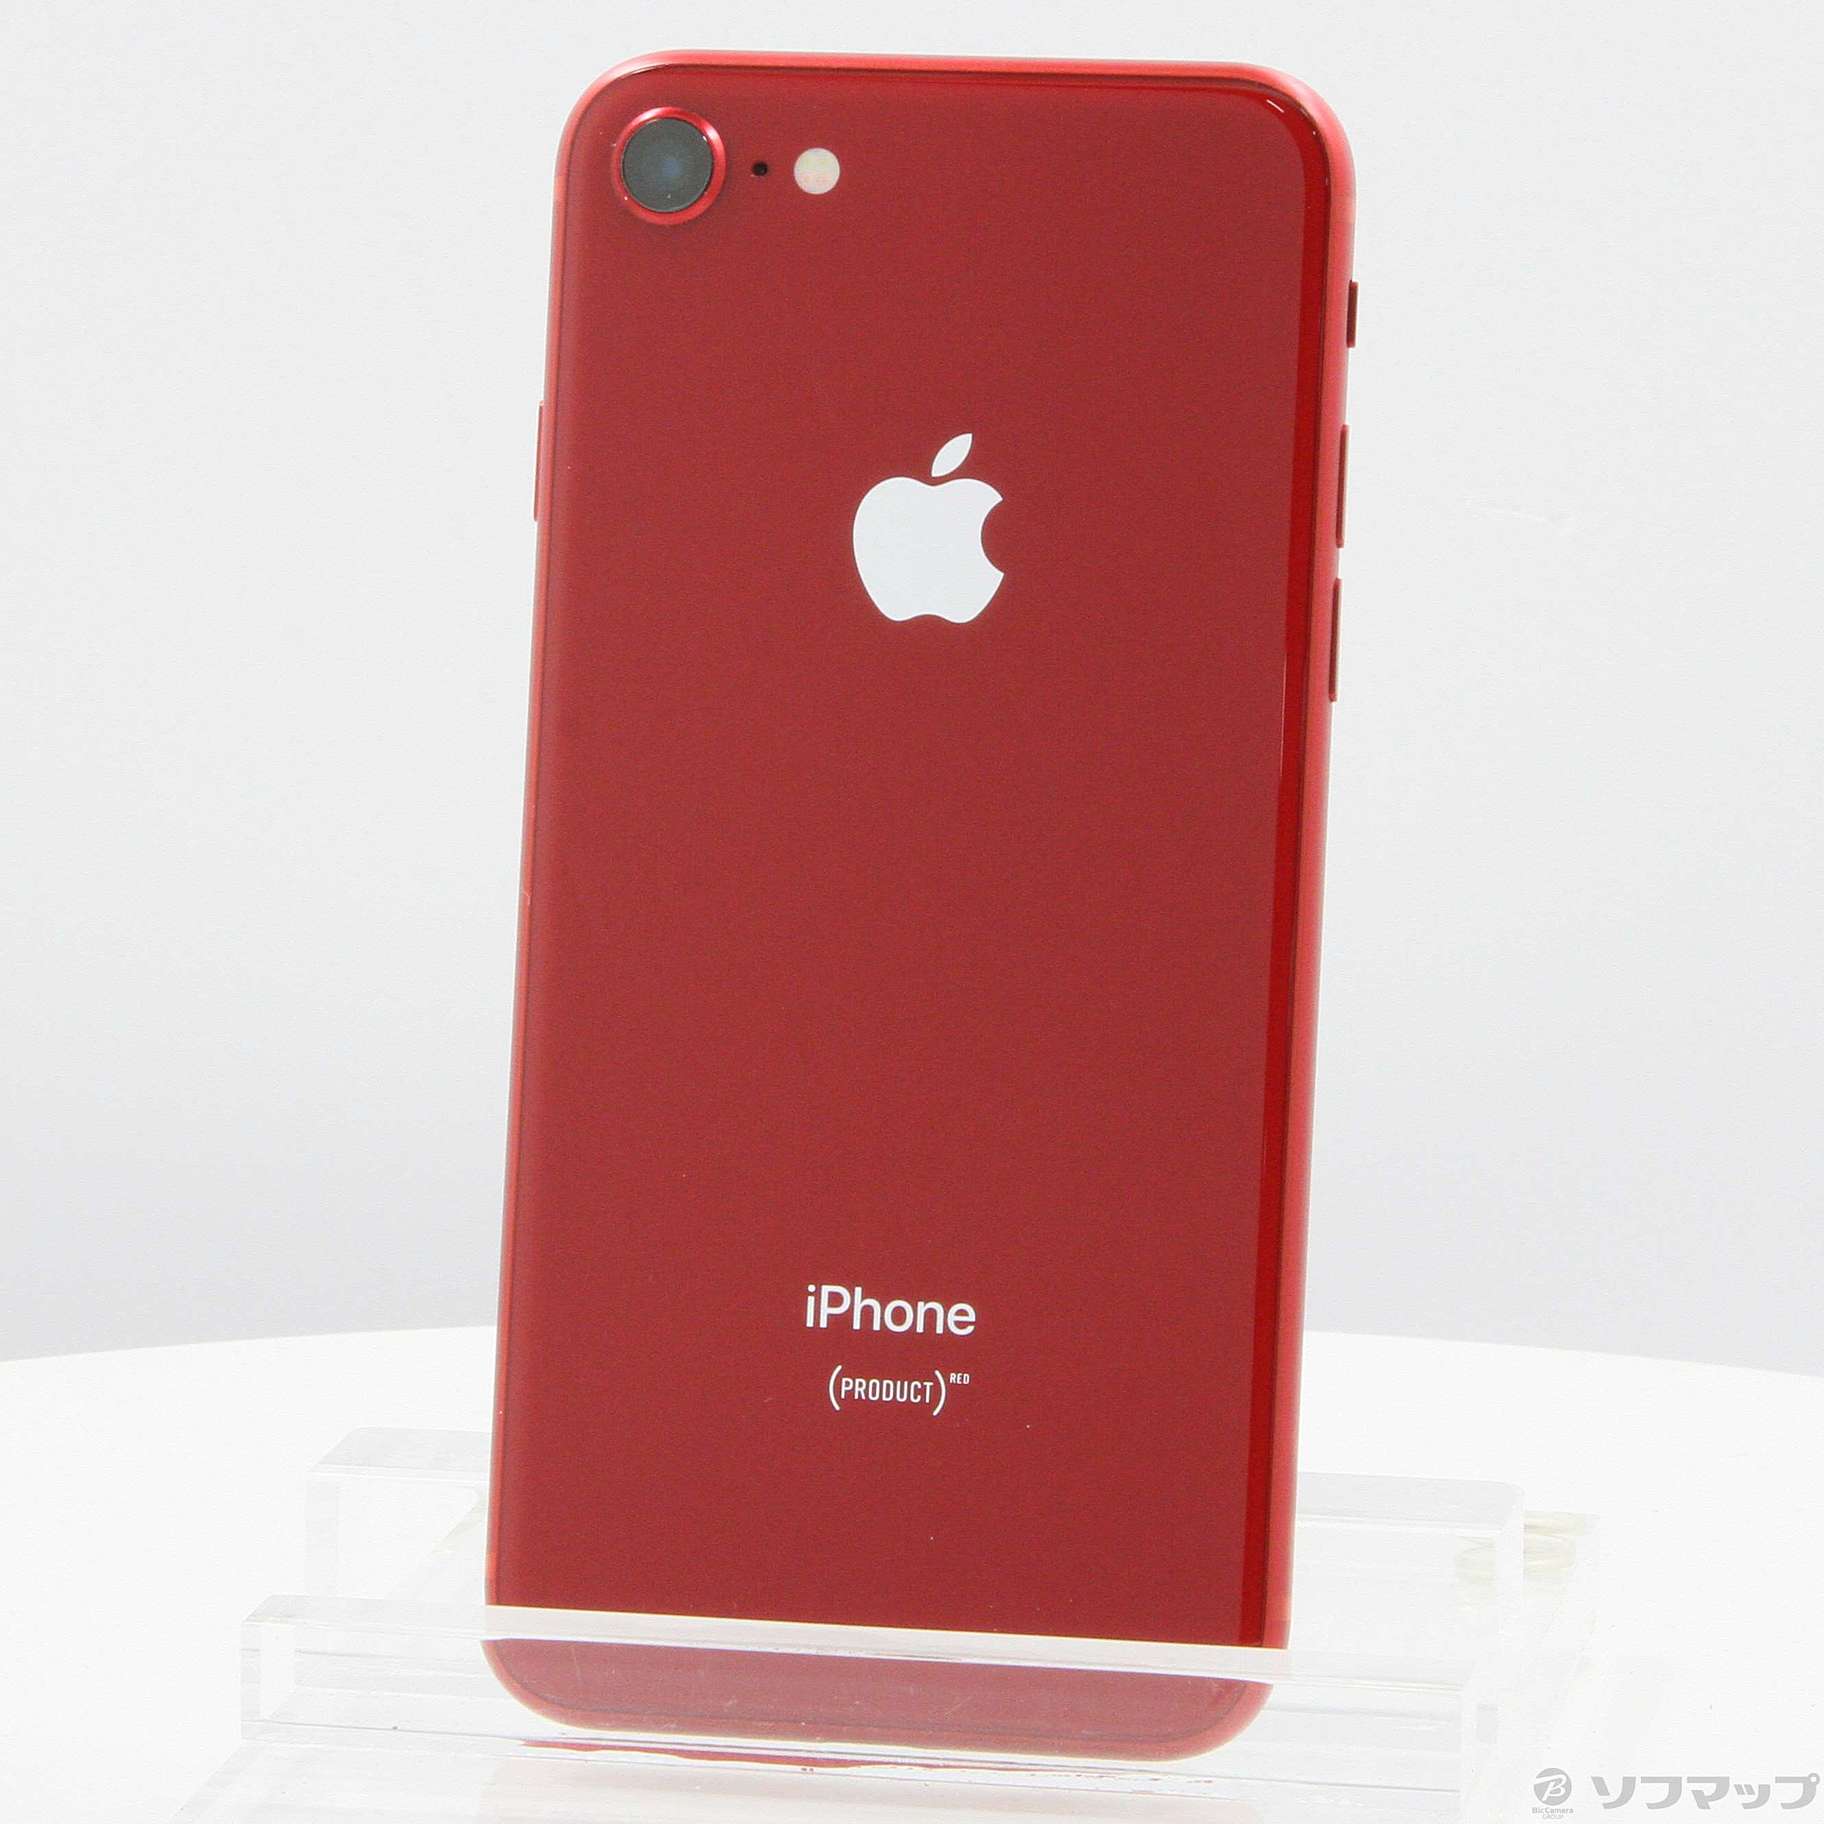 iPhone8 64GB red アップルケア